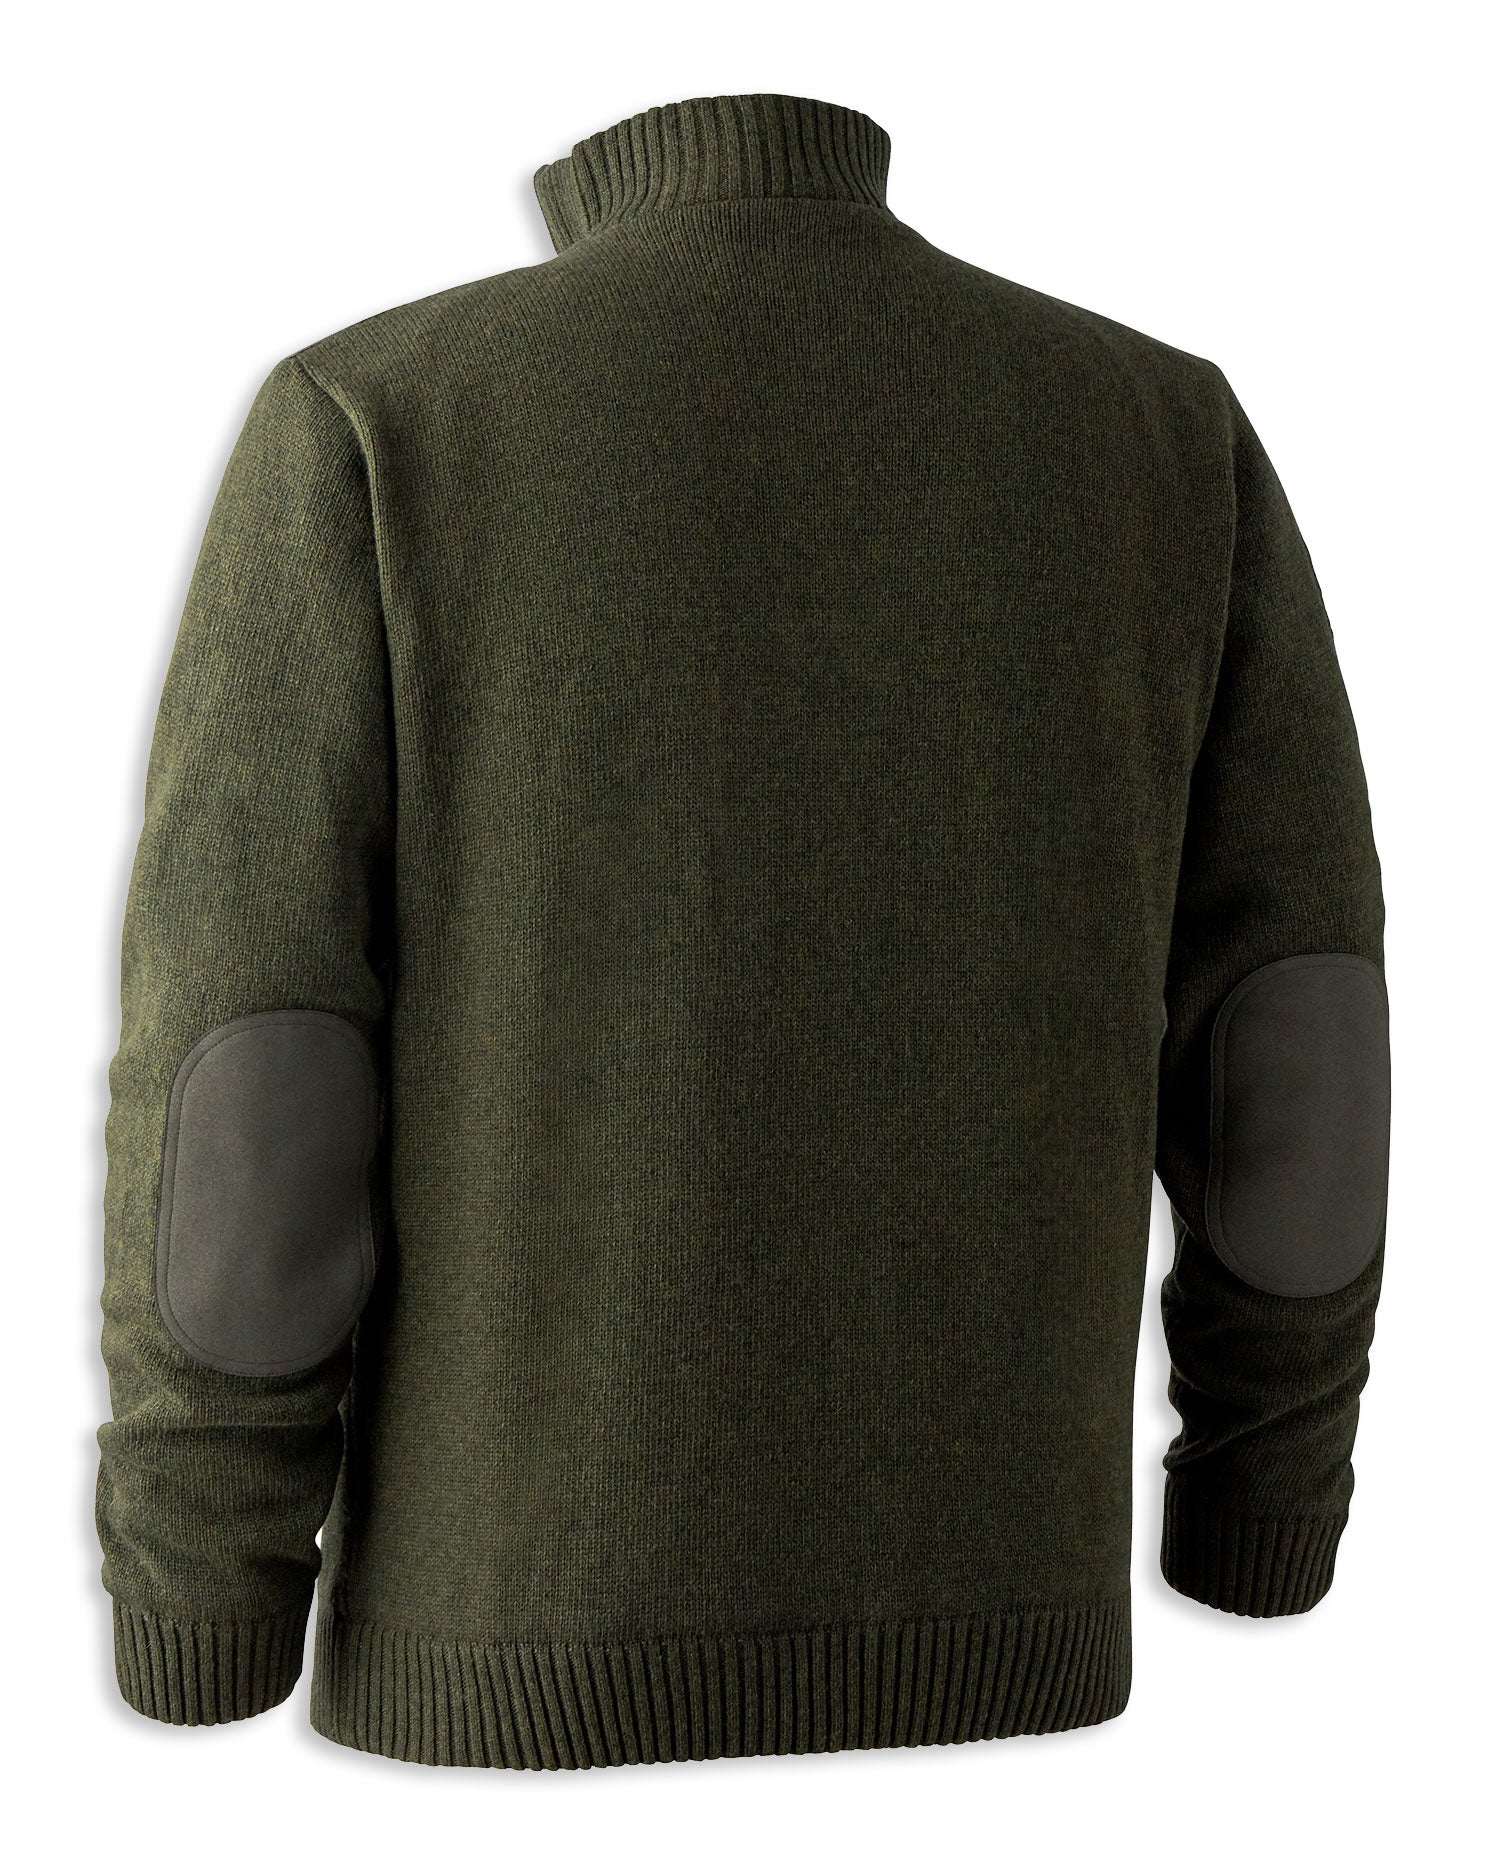 Back Green Melange Deerhunter Carlisle Knit with Stormliner Zip Neck Sweater 